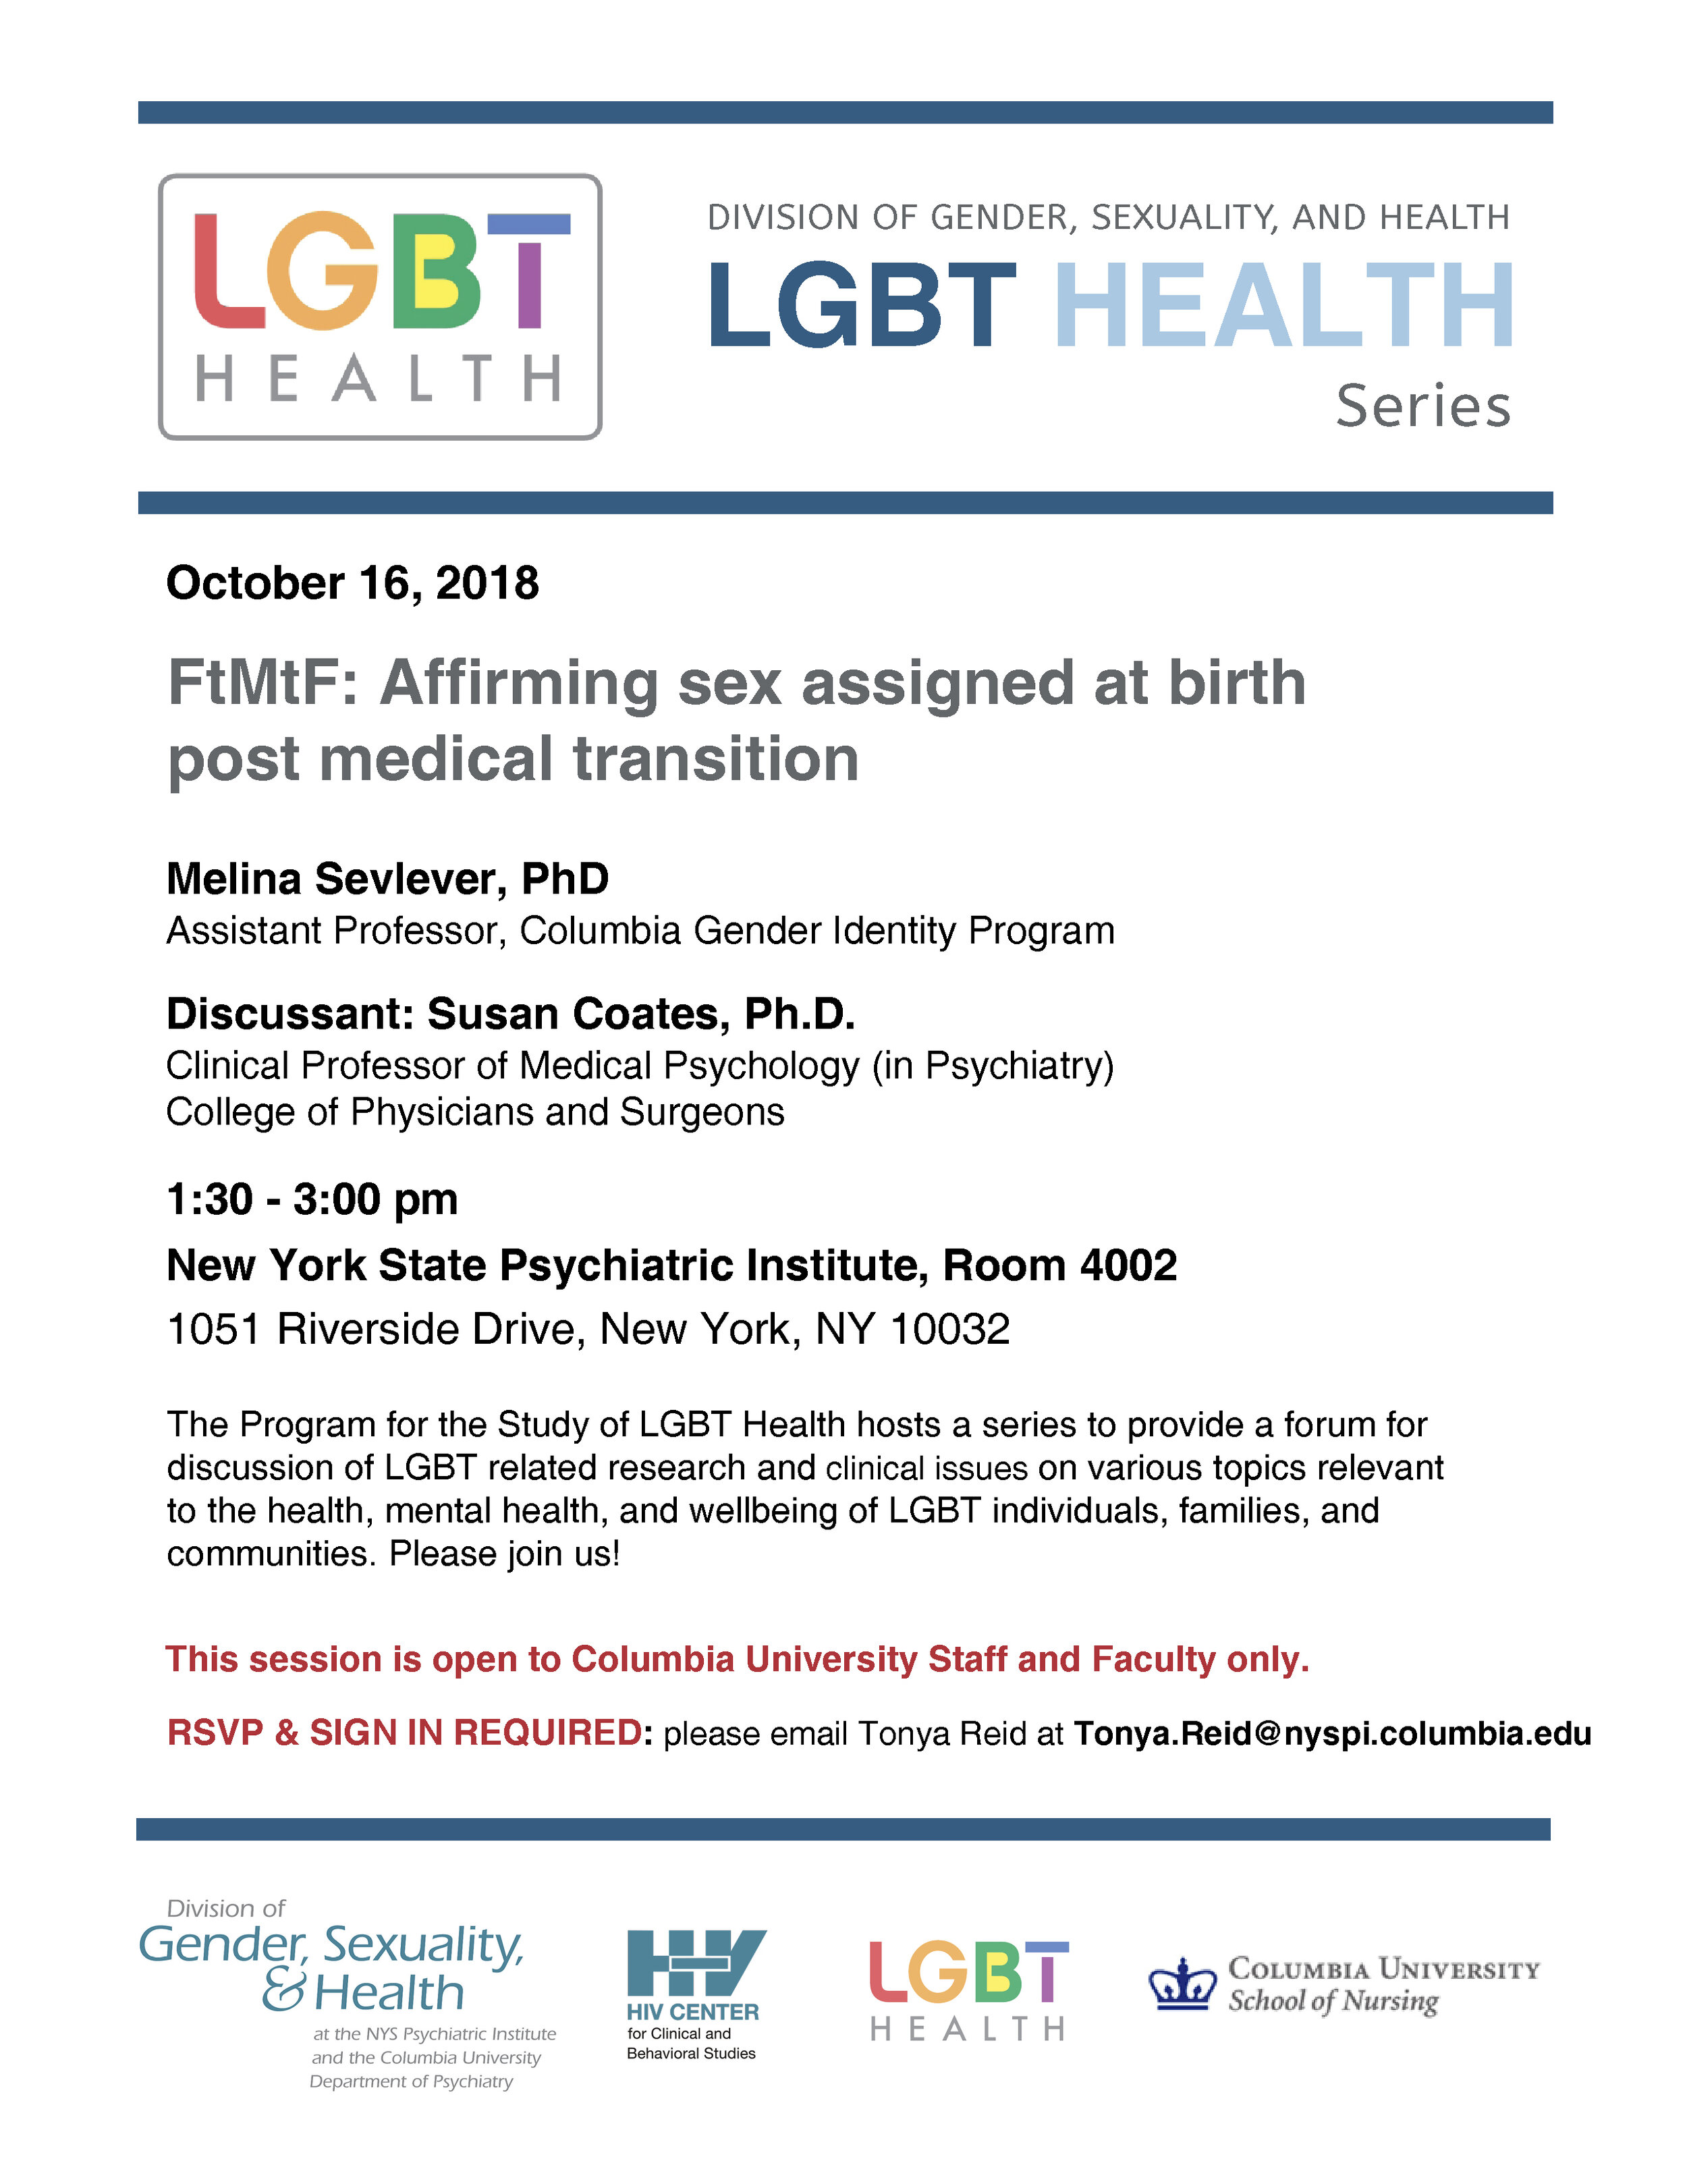 LGBT Health Series Oct 16 2018.jpg